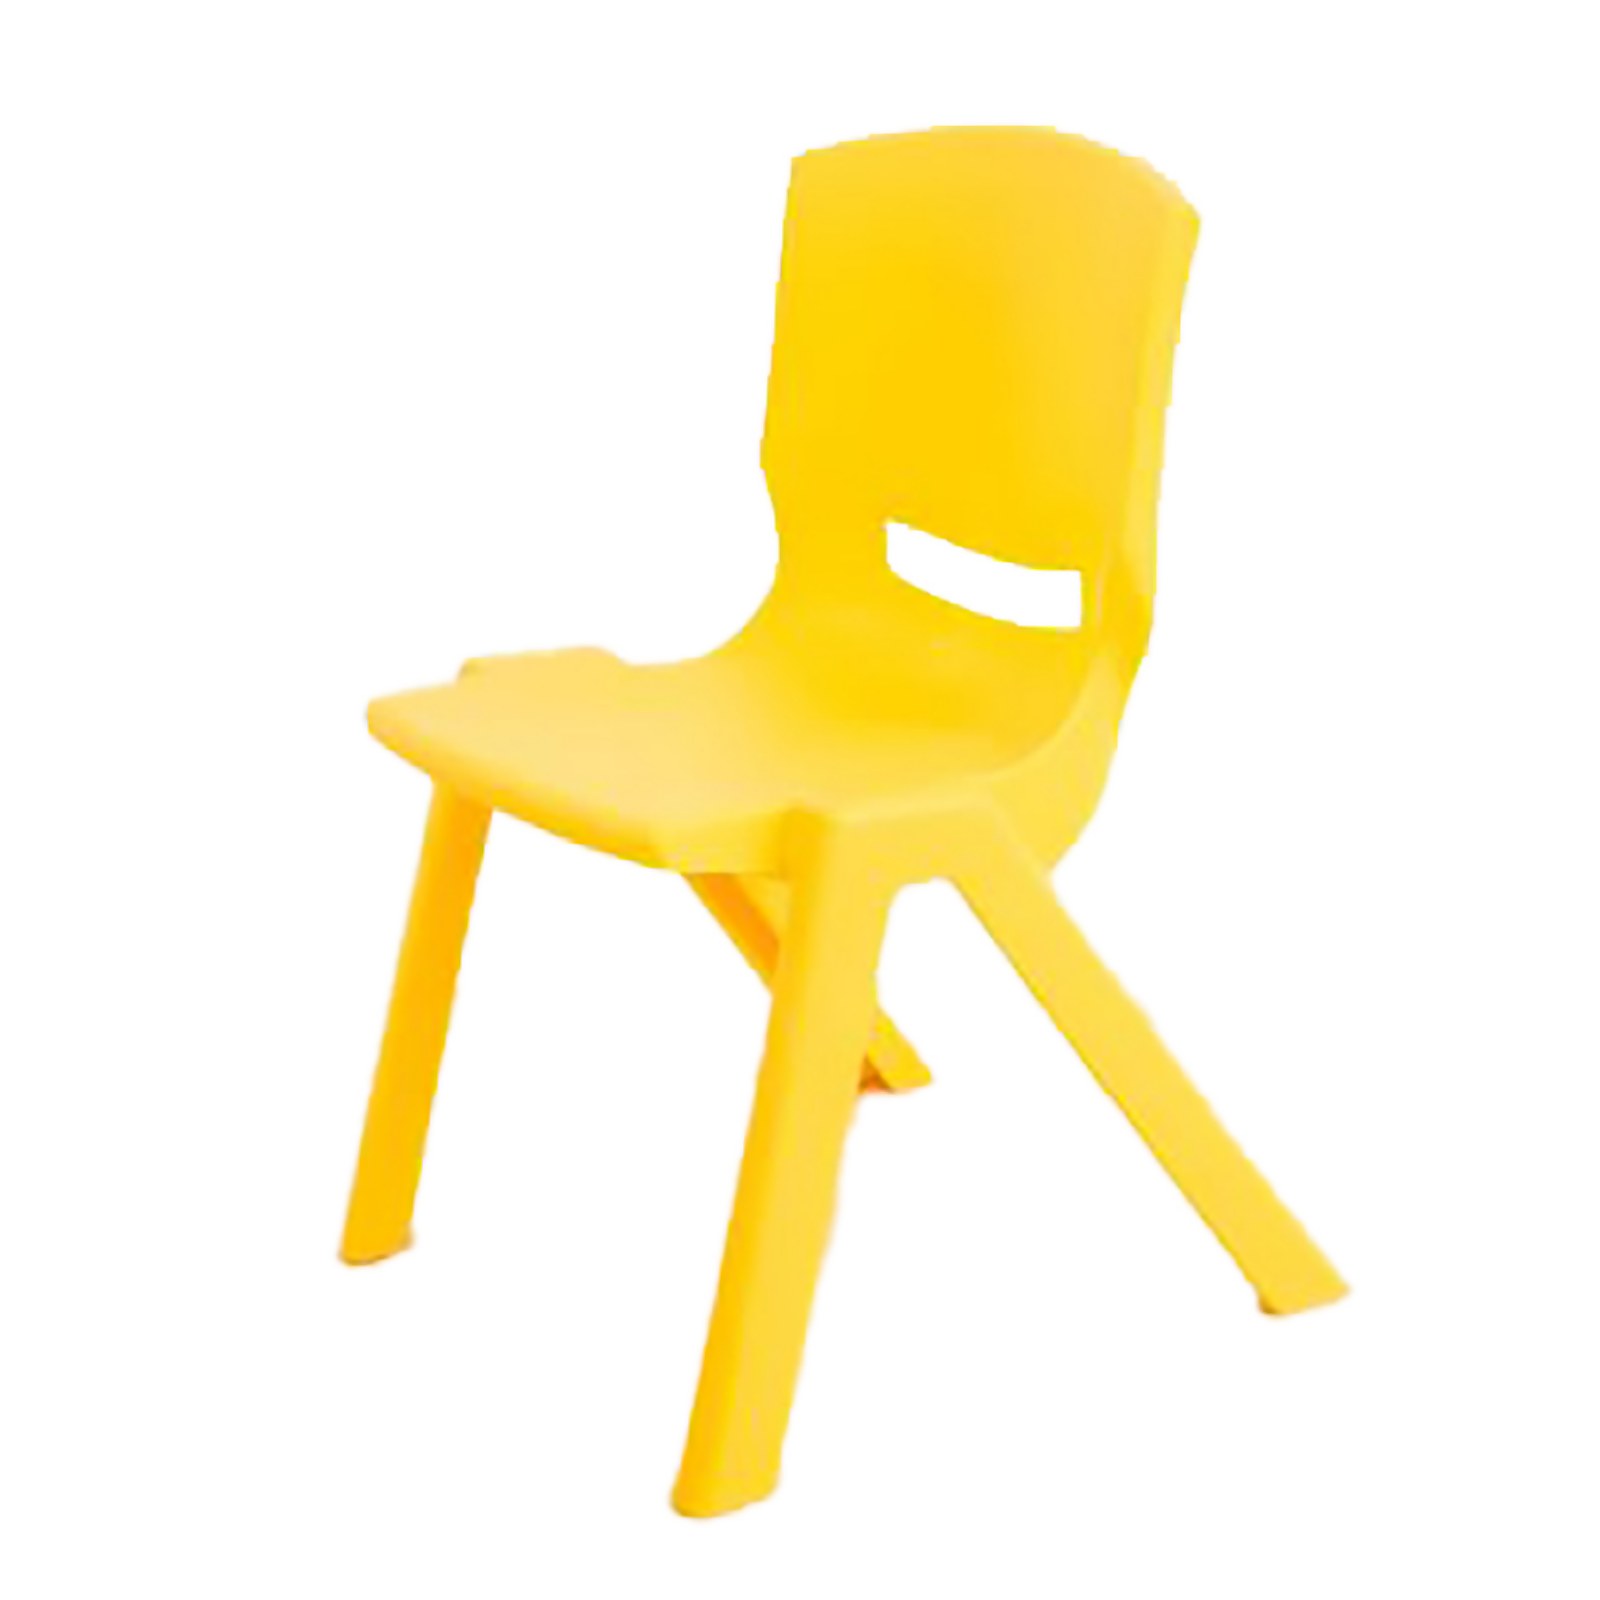 Photo of Kids Plastic Stacking Chair - Yellow